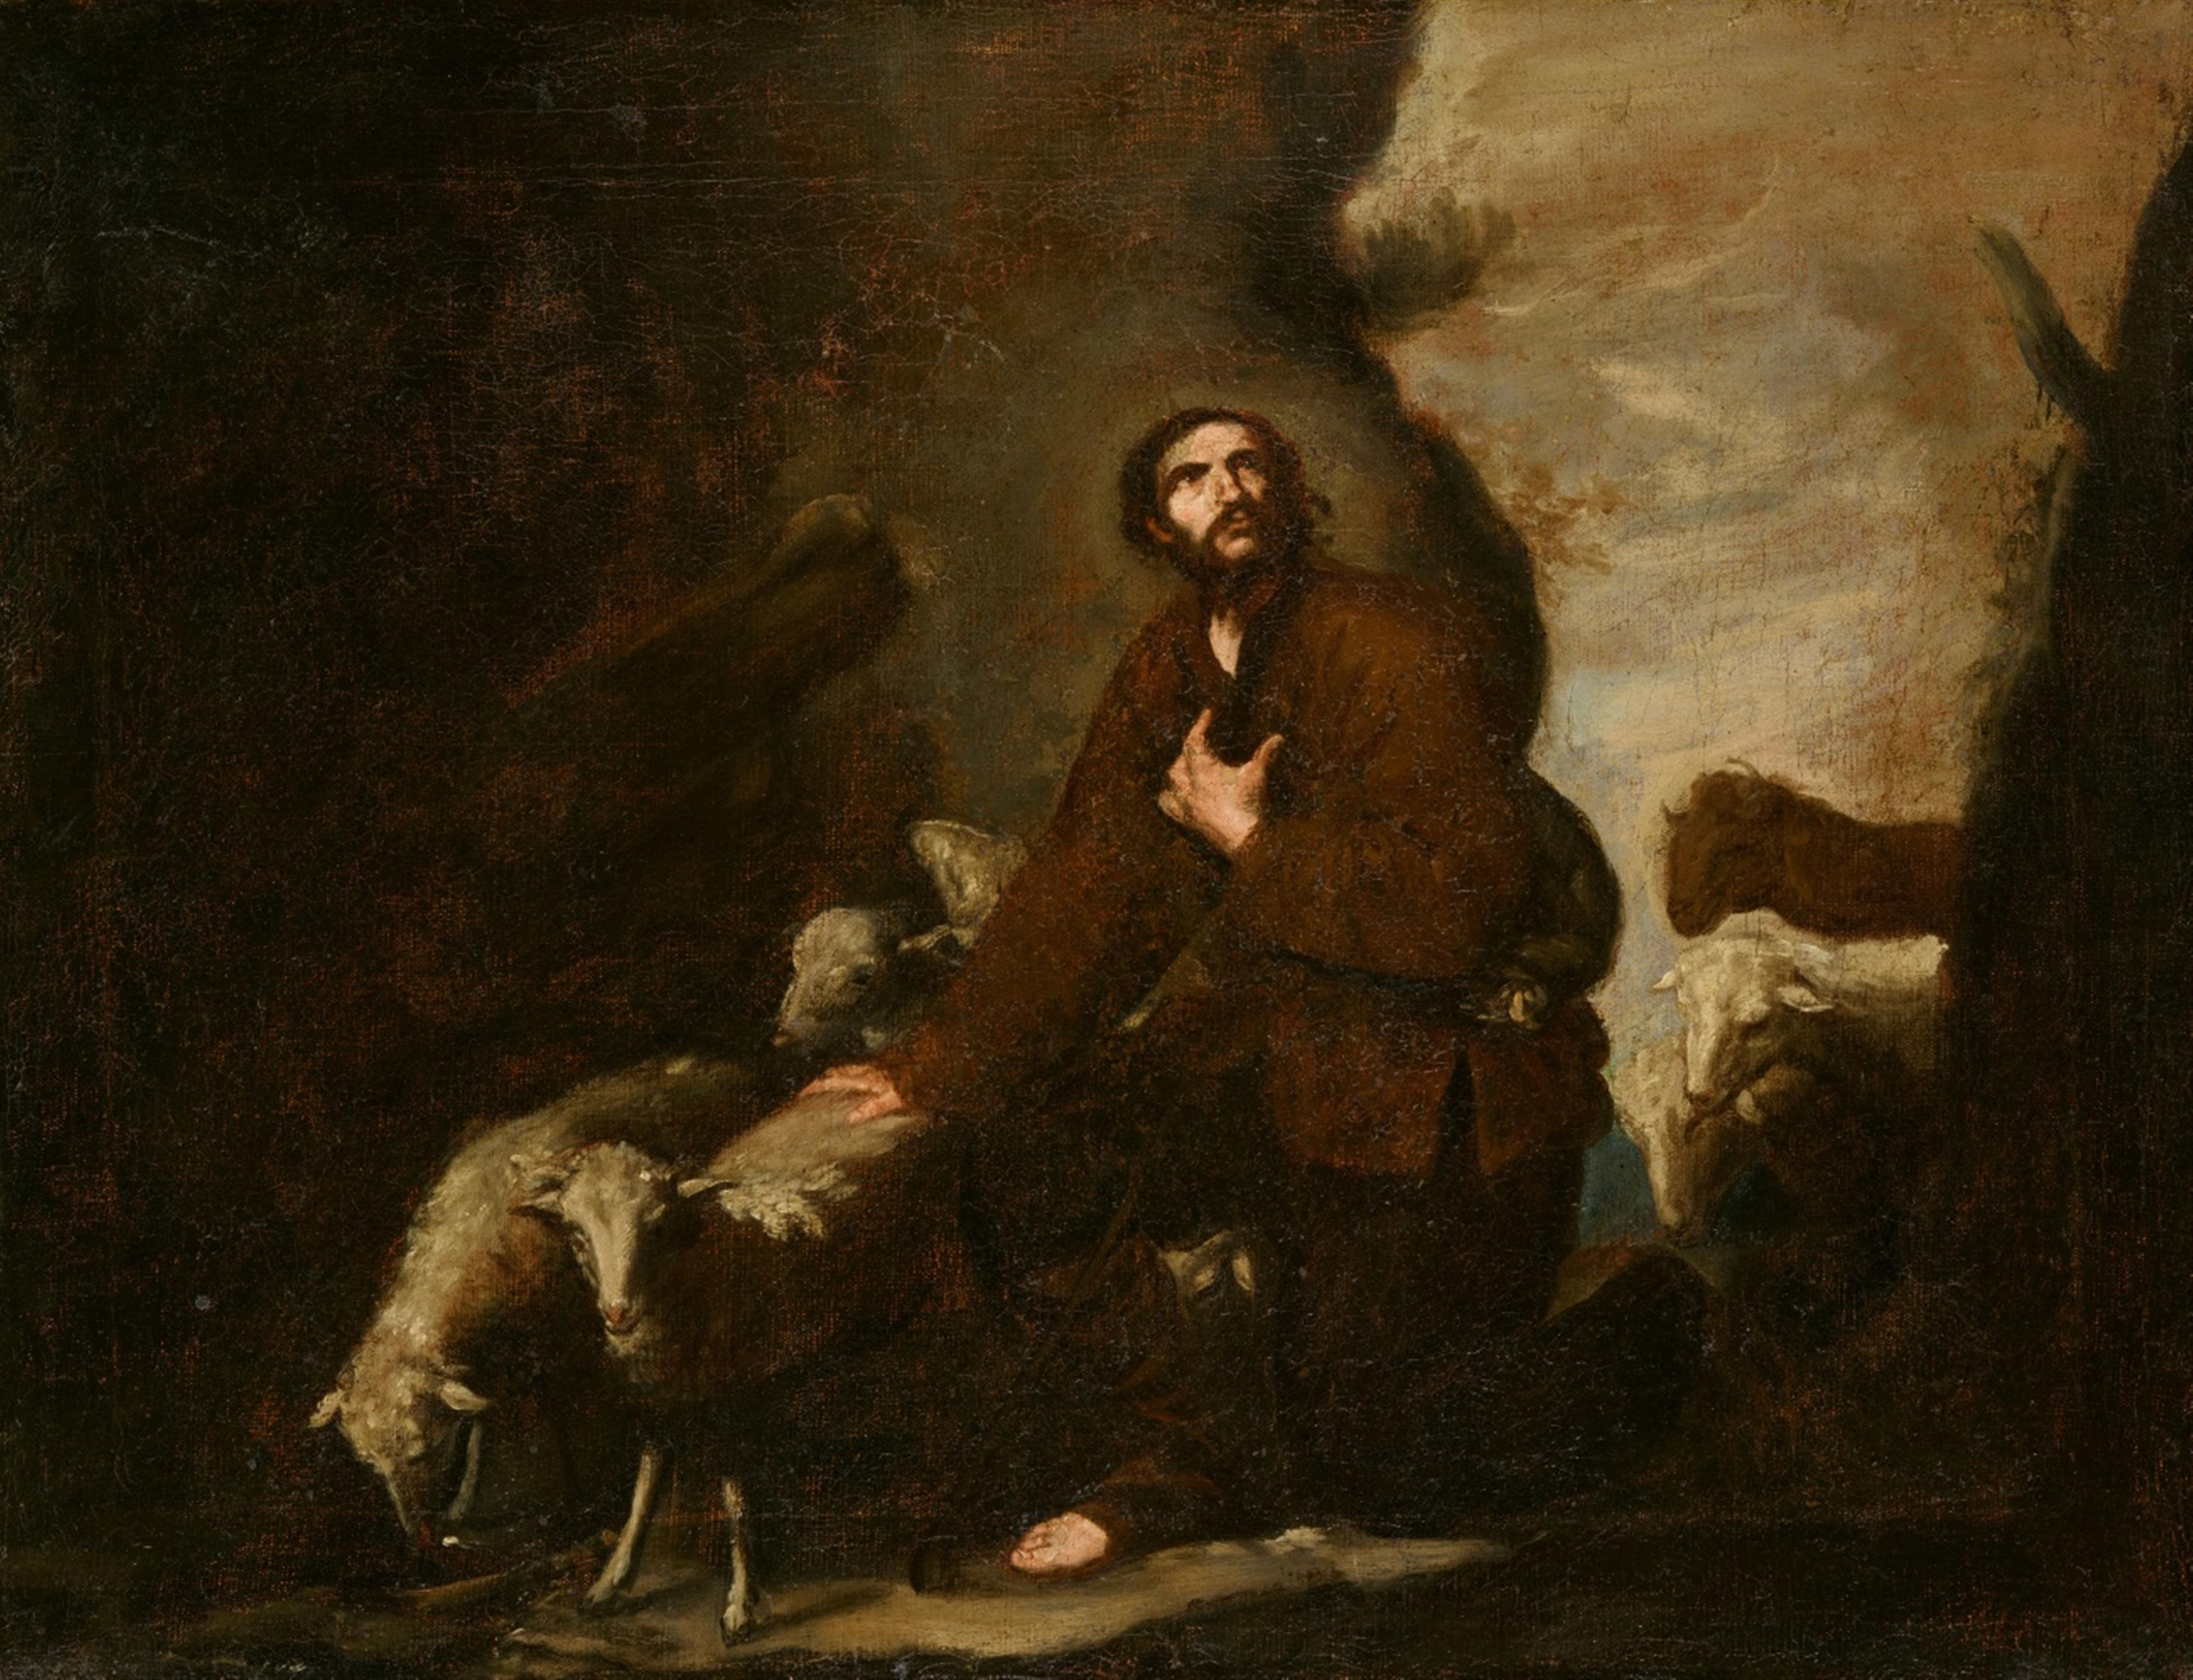 Jusepe de Ribera, studio of - Jacob and the Flock of Sheep - image-1